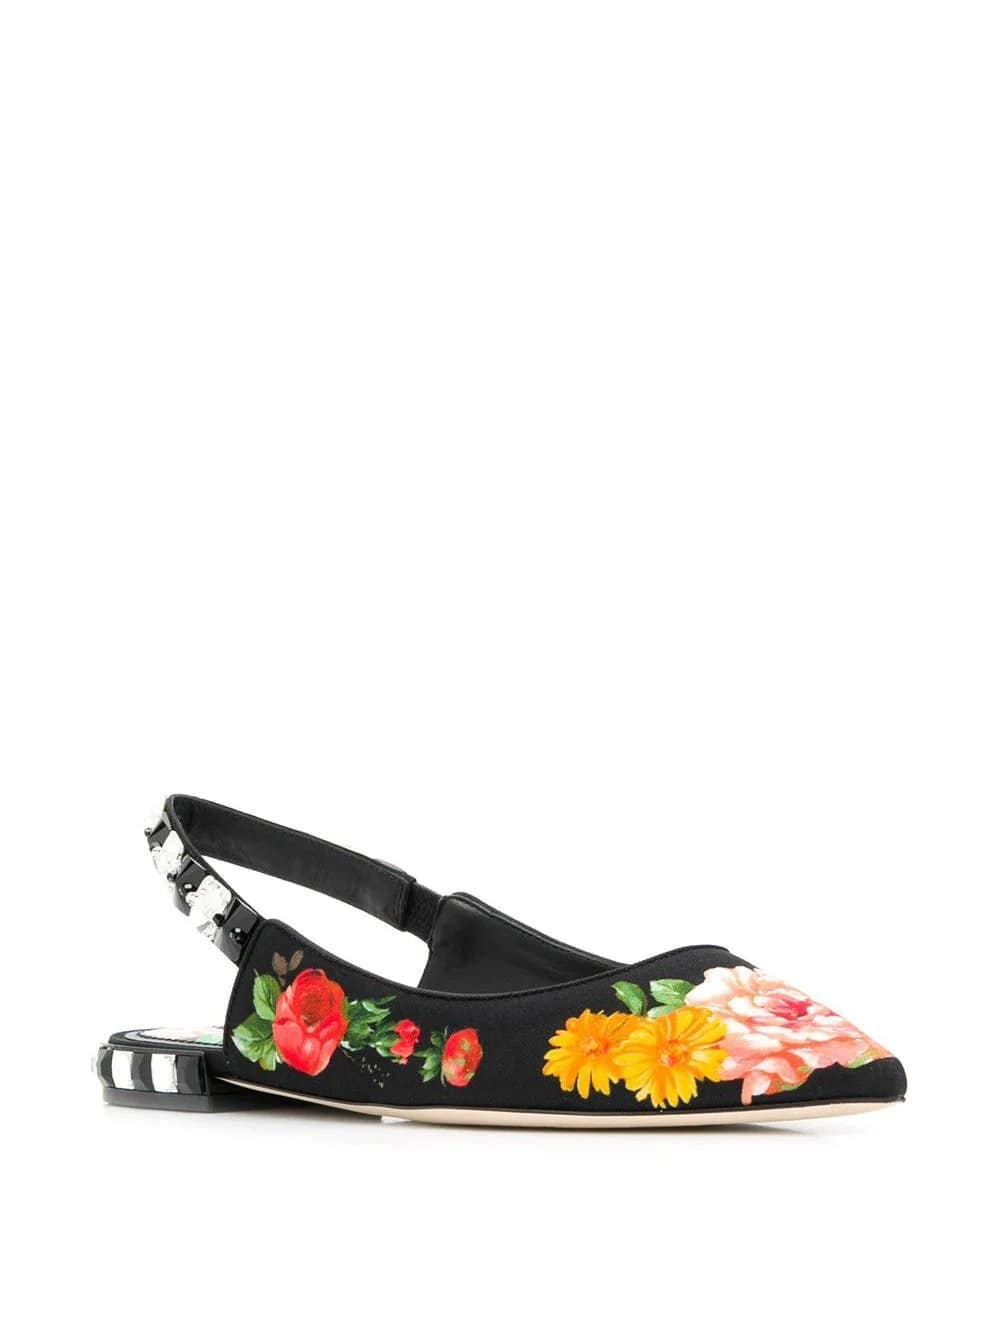 Dolce & Gabbana Floral-Print Flat Sandals